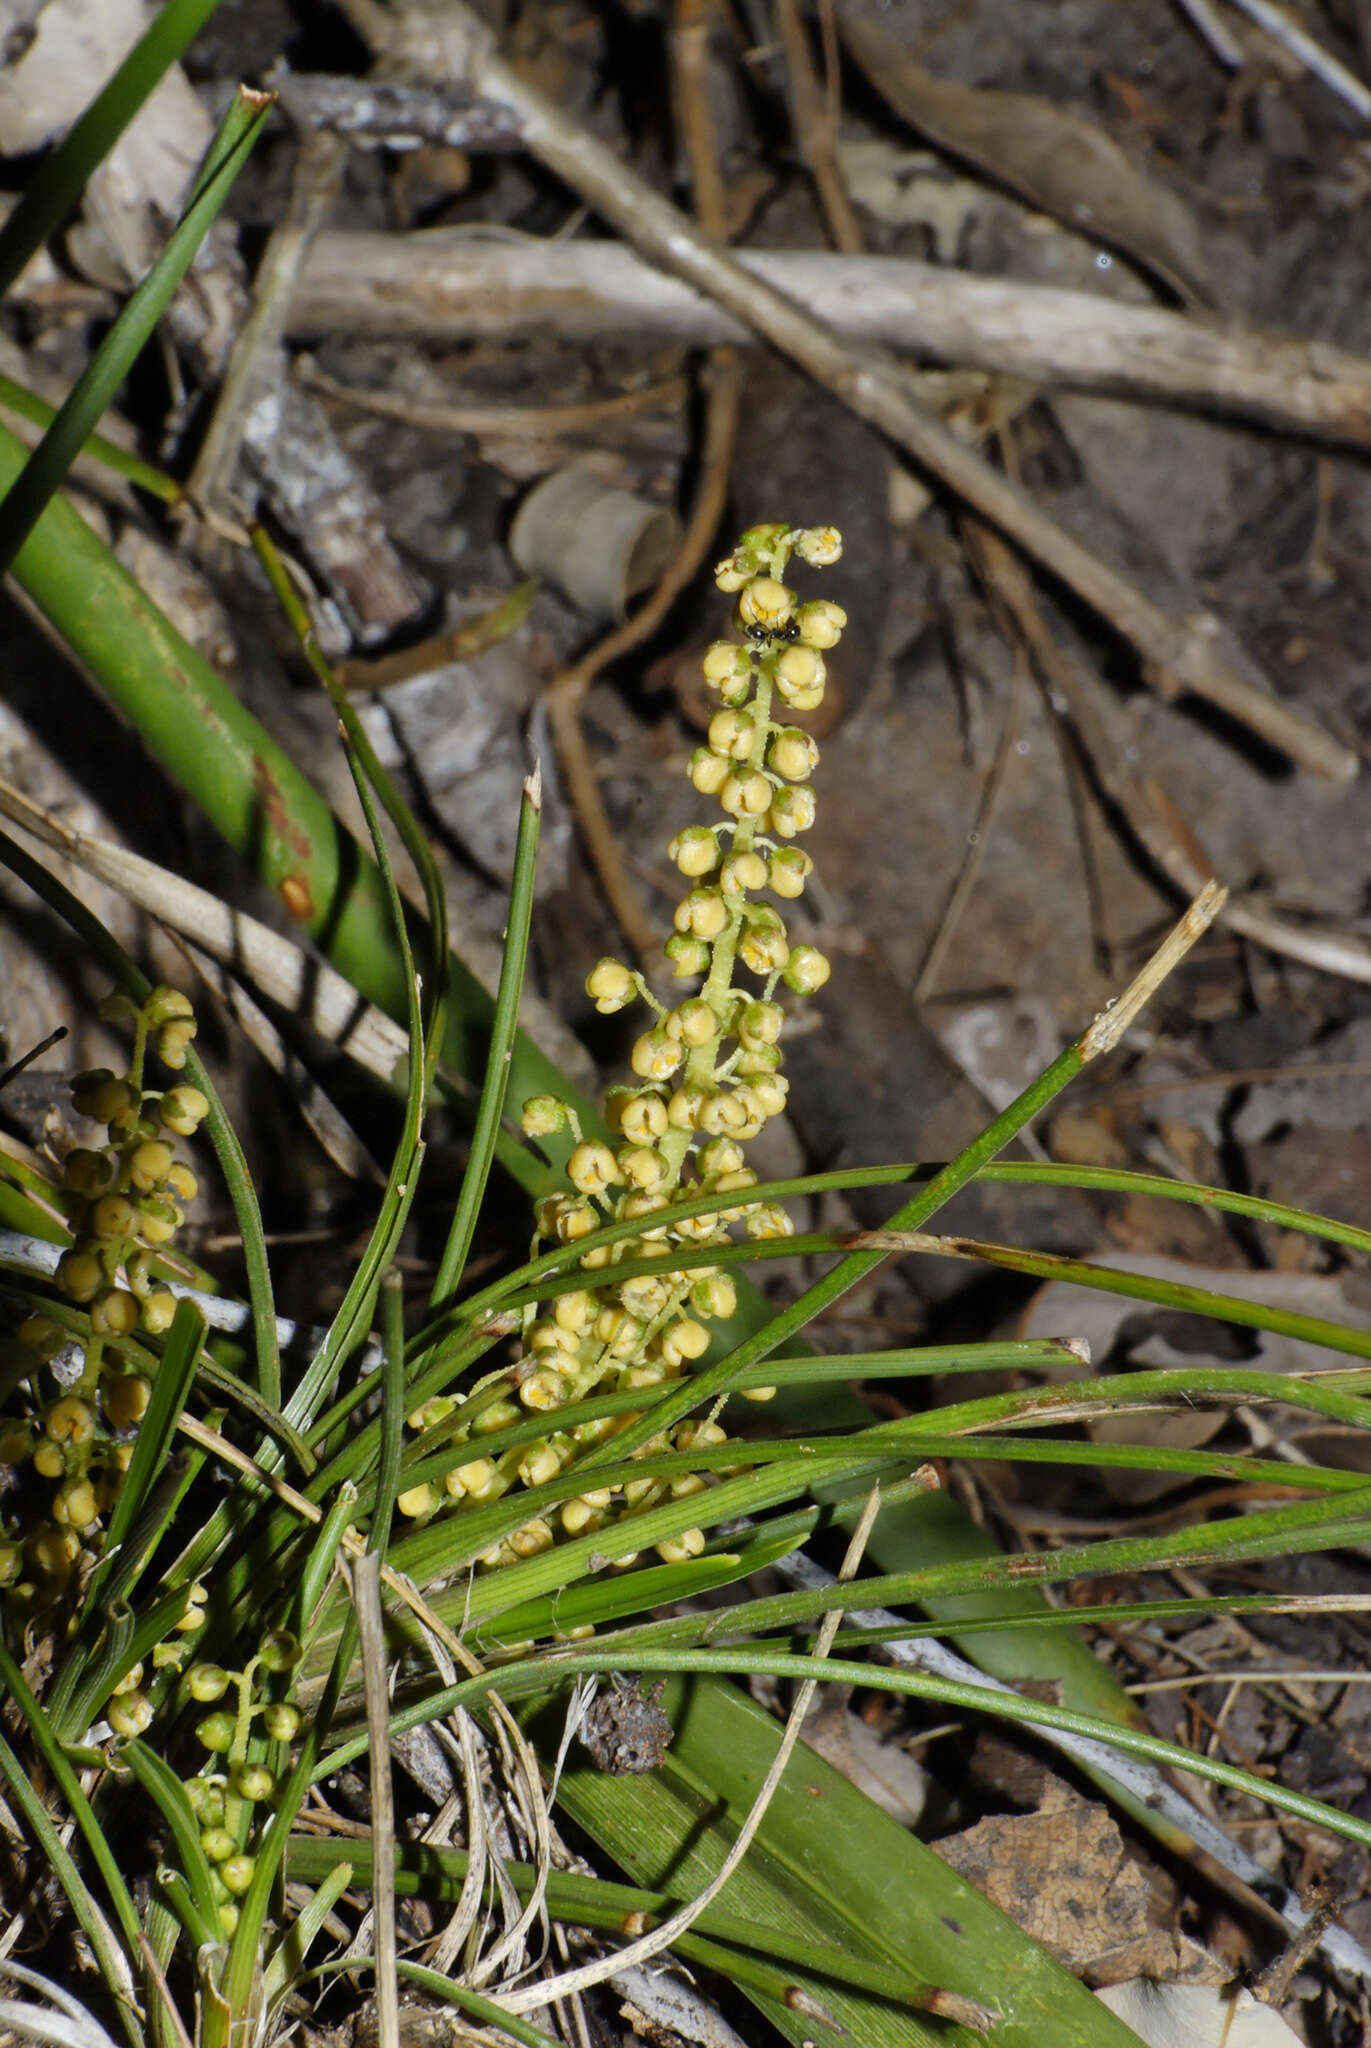 Image of Lomandra filiformis subsp. filiformis